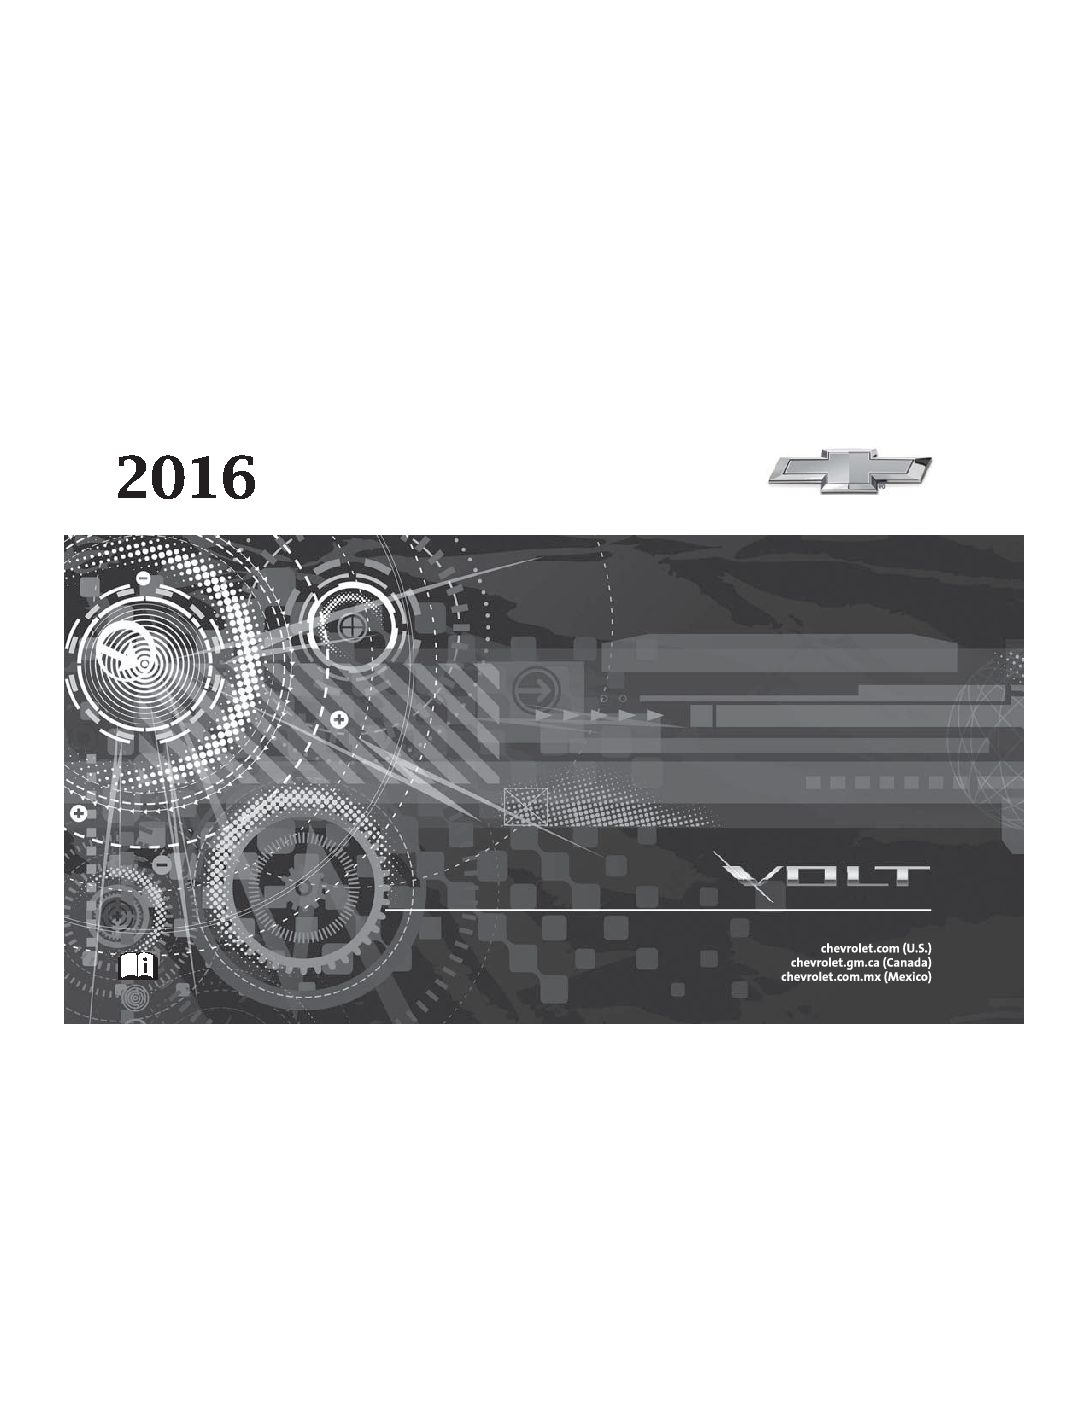 2016 Chevrolet Volt Image